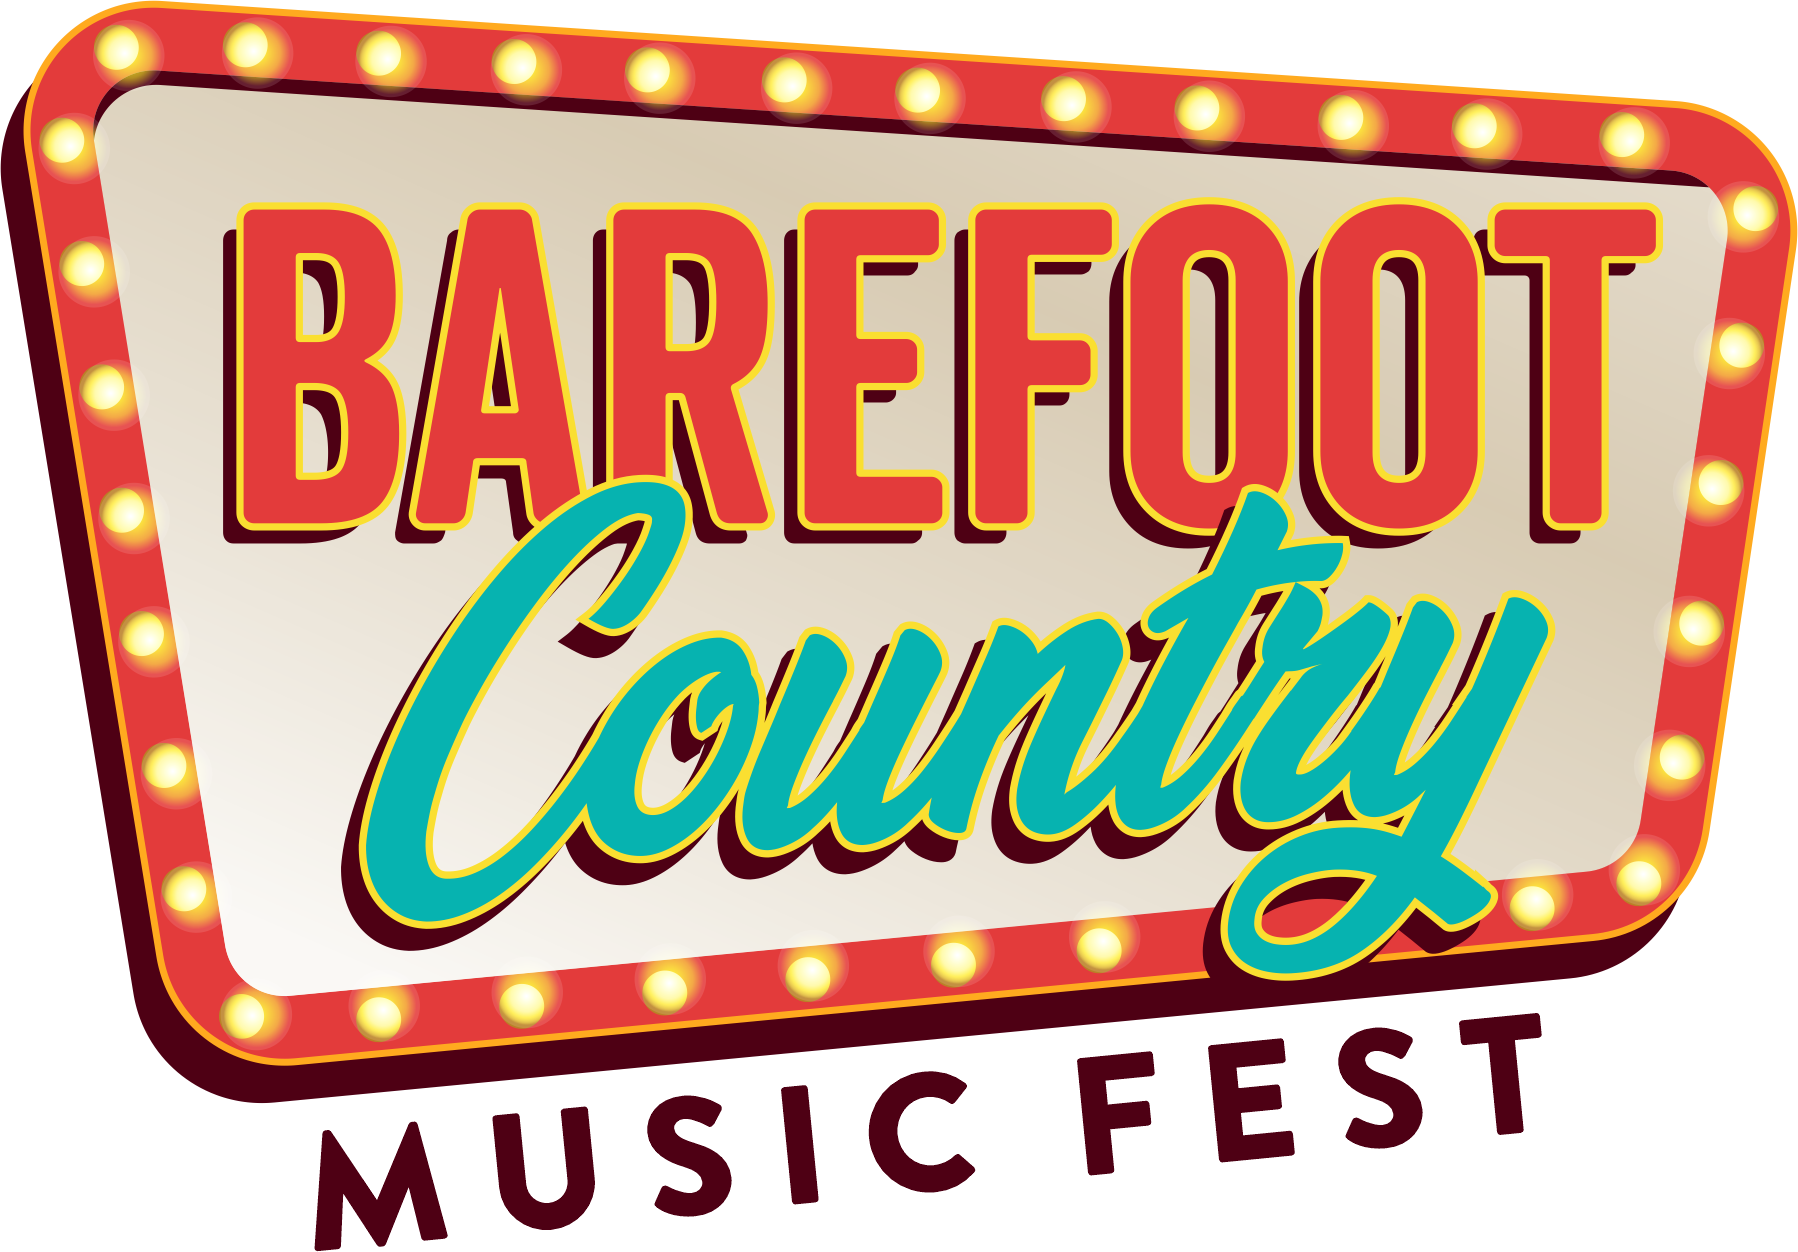 Barefoot Country Music Festival logo